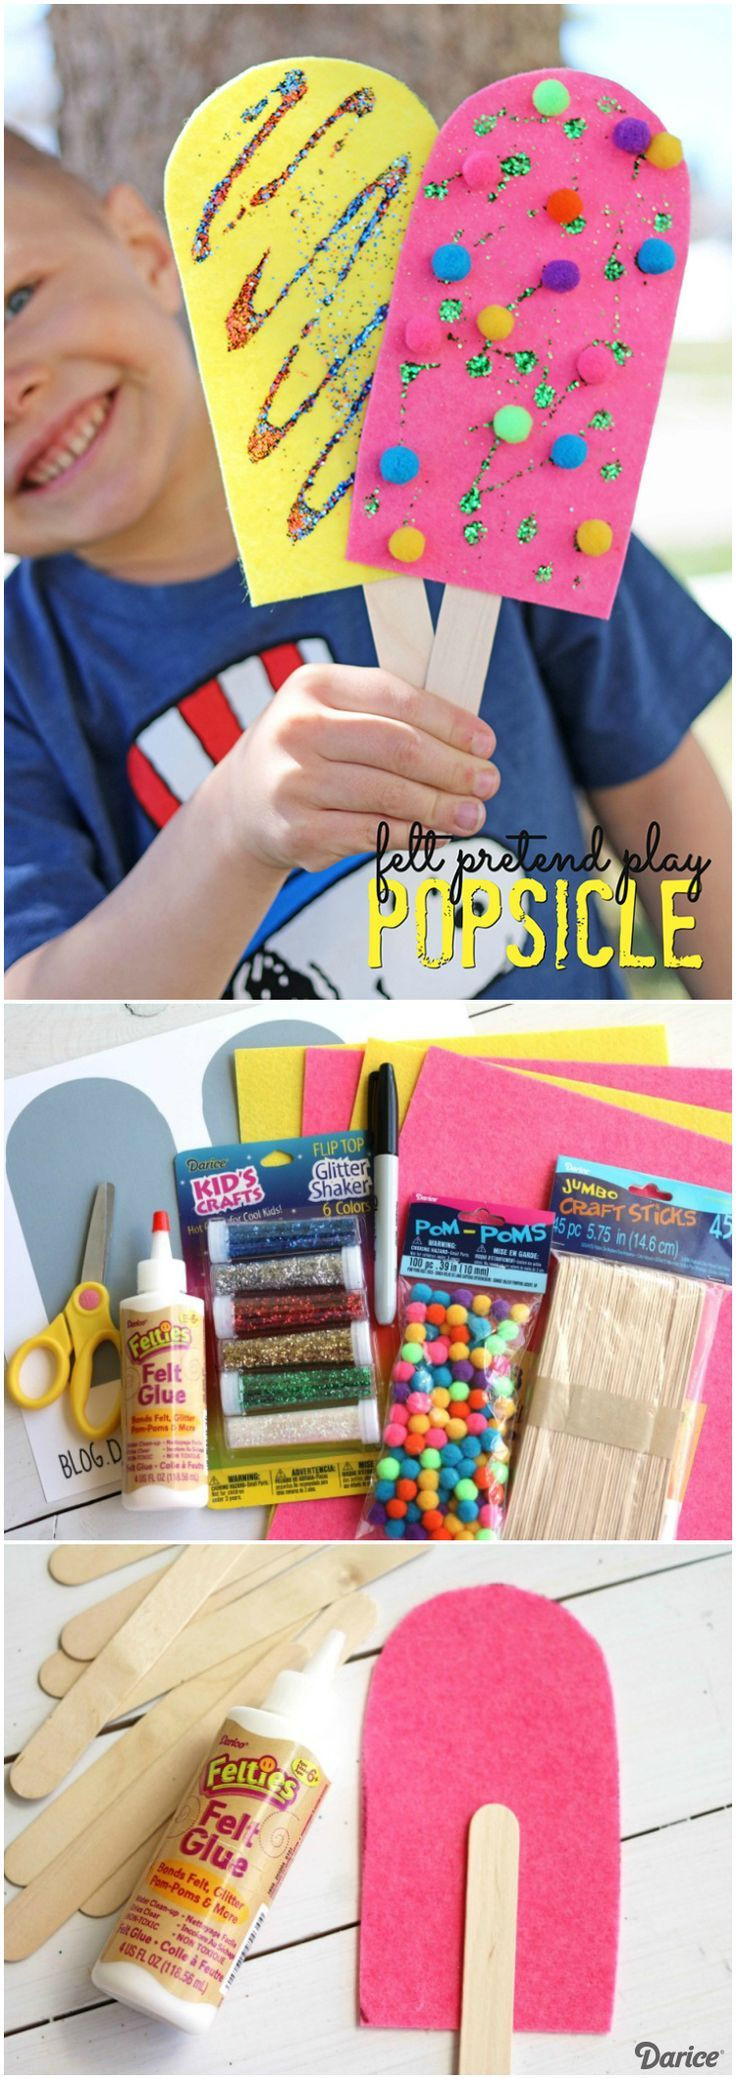 Preschool Summer Craft Ideas
 Popsicle Craft for Pretend Play Darice